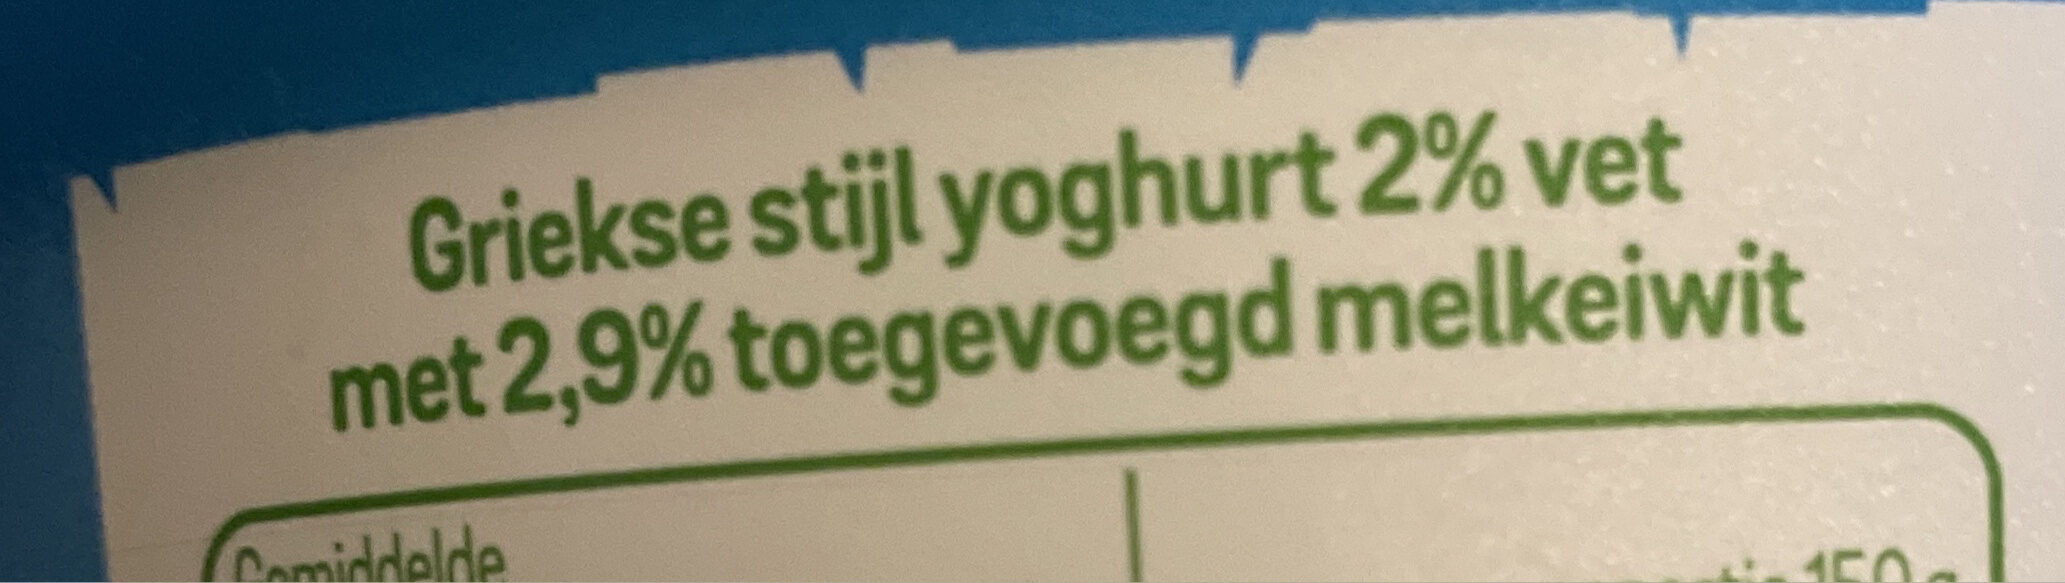 Griekse stijl yoghurt 2% - Ingrediënten